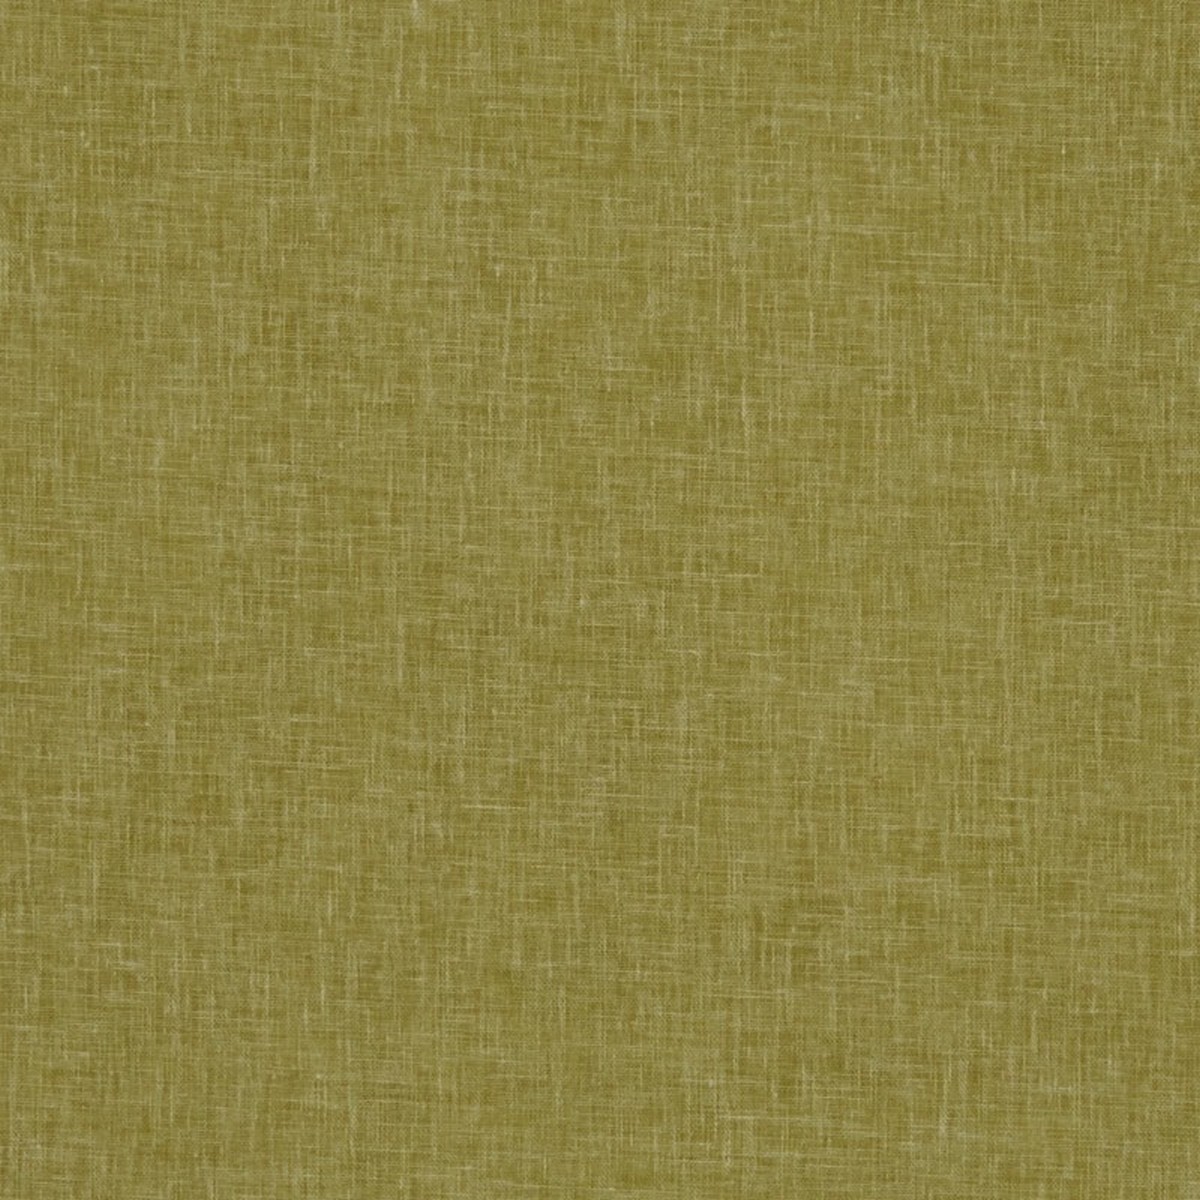 Midori Gold Fabric by Clarke & Clarke